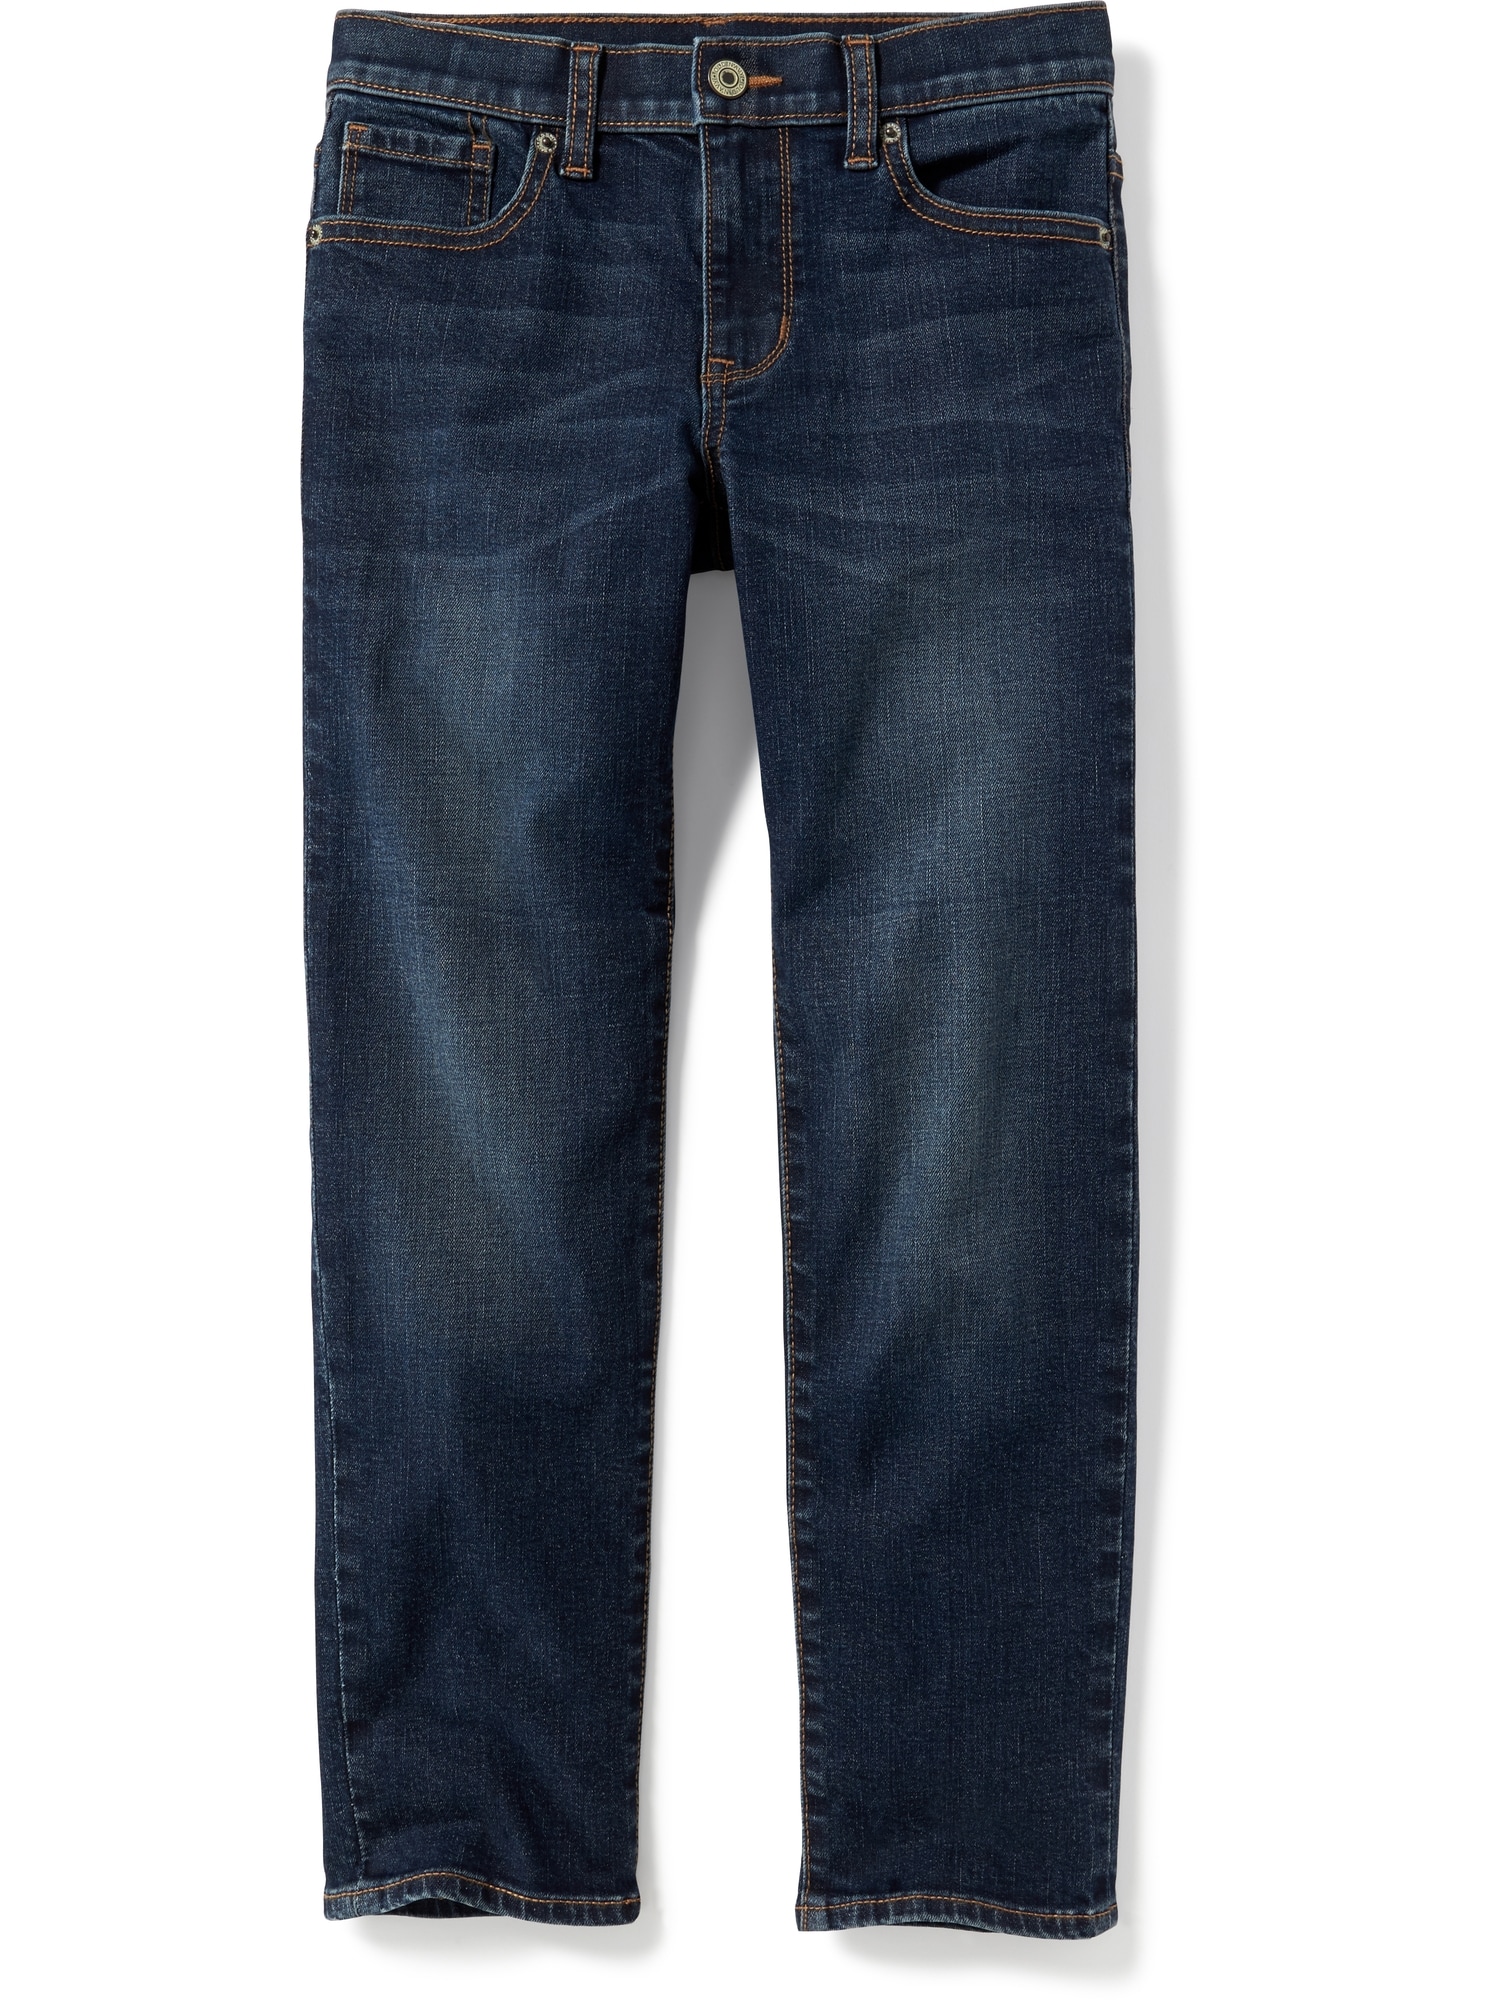 Old Navy Stretch Slim Dark Wash Jeans Mens Size 36x32 Blue RN 54023